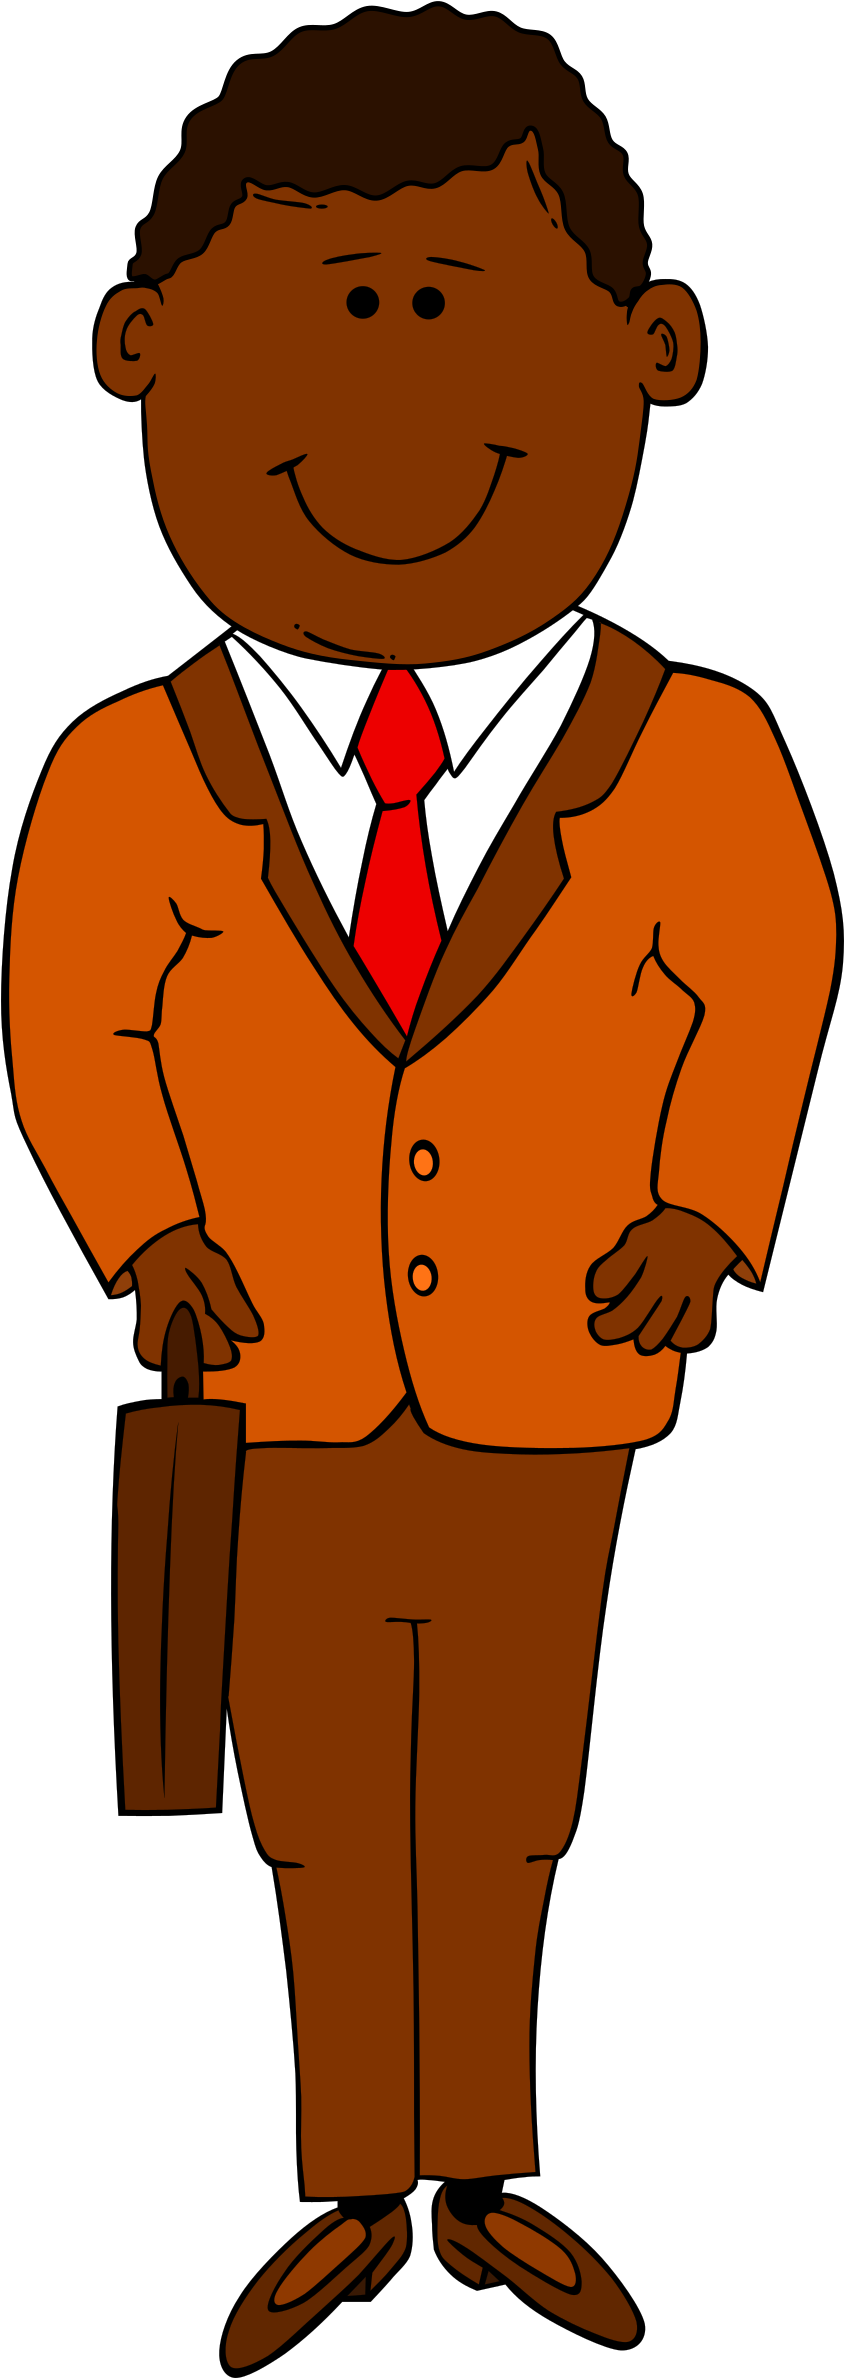 Big Image - Cartoon Man In Suit (843x2400)